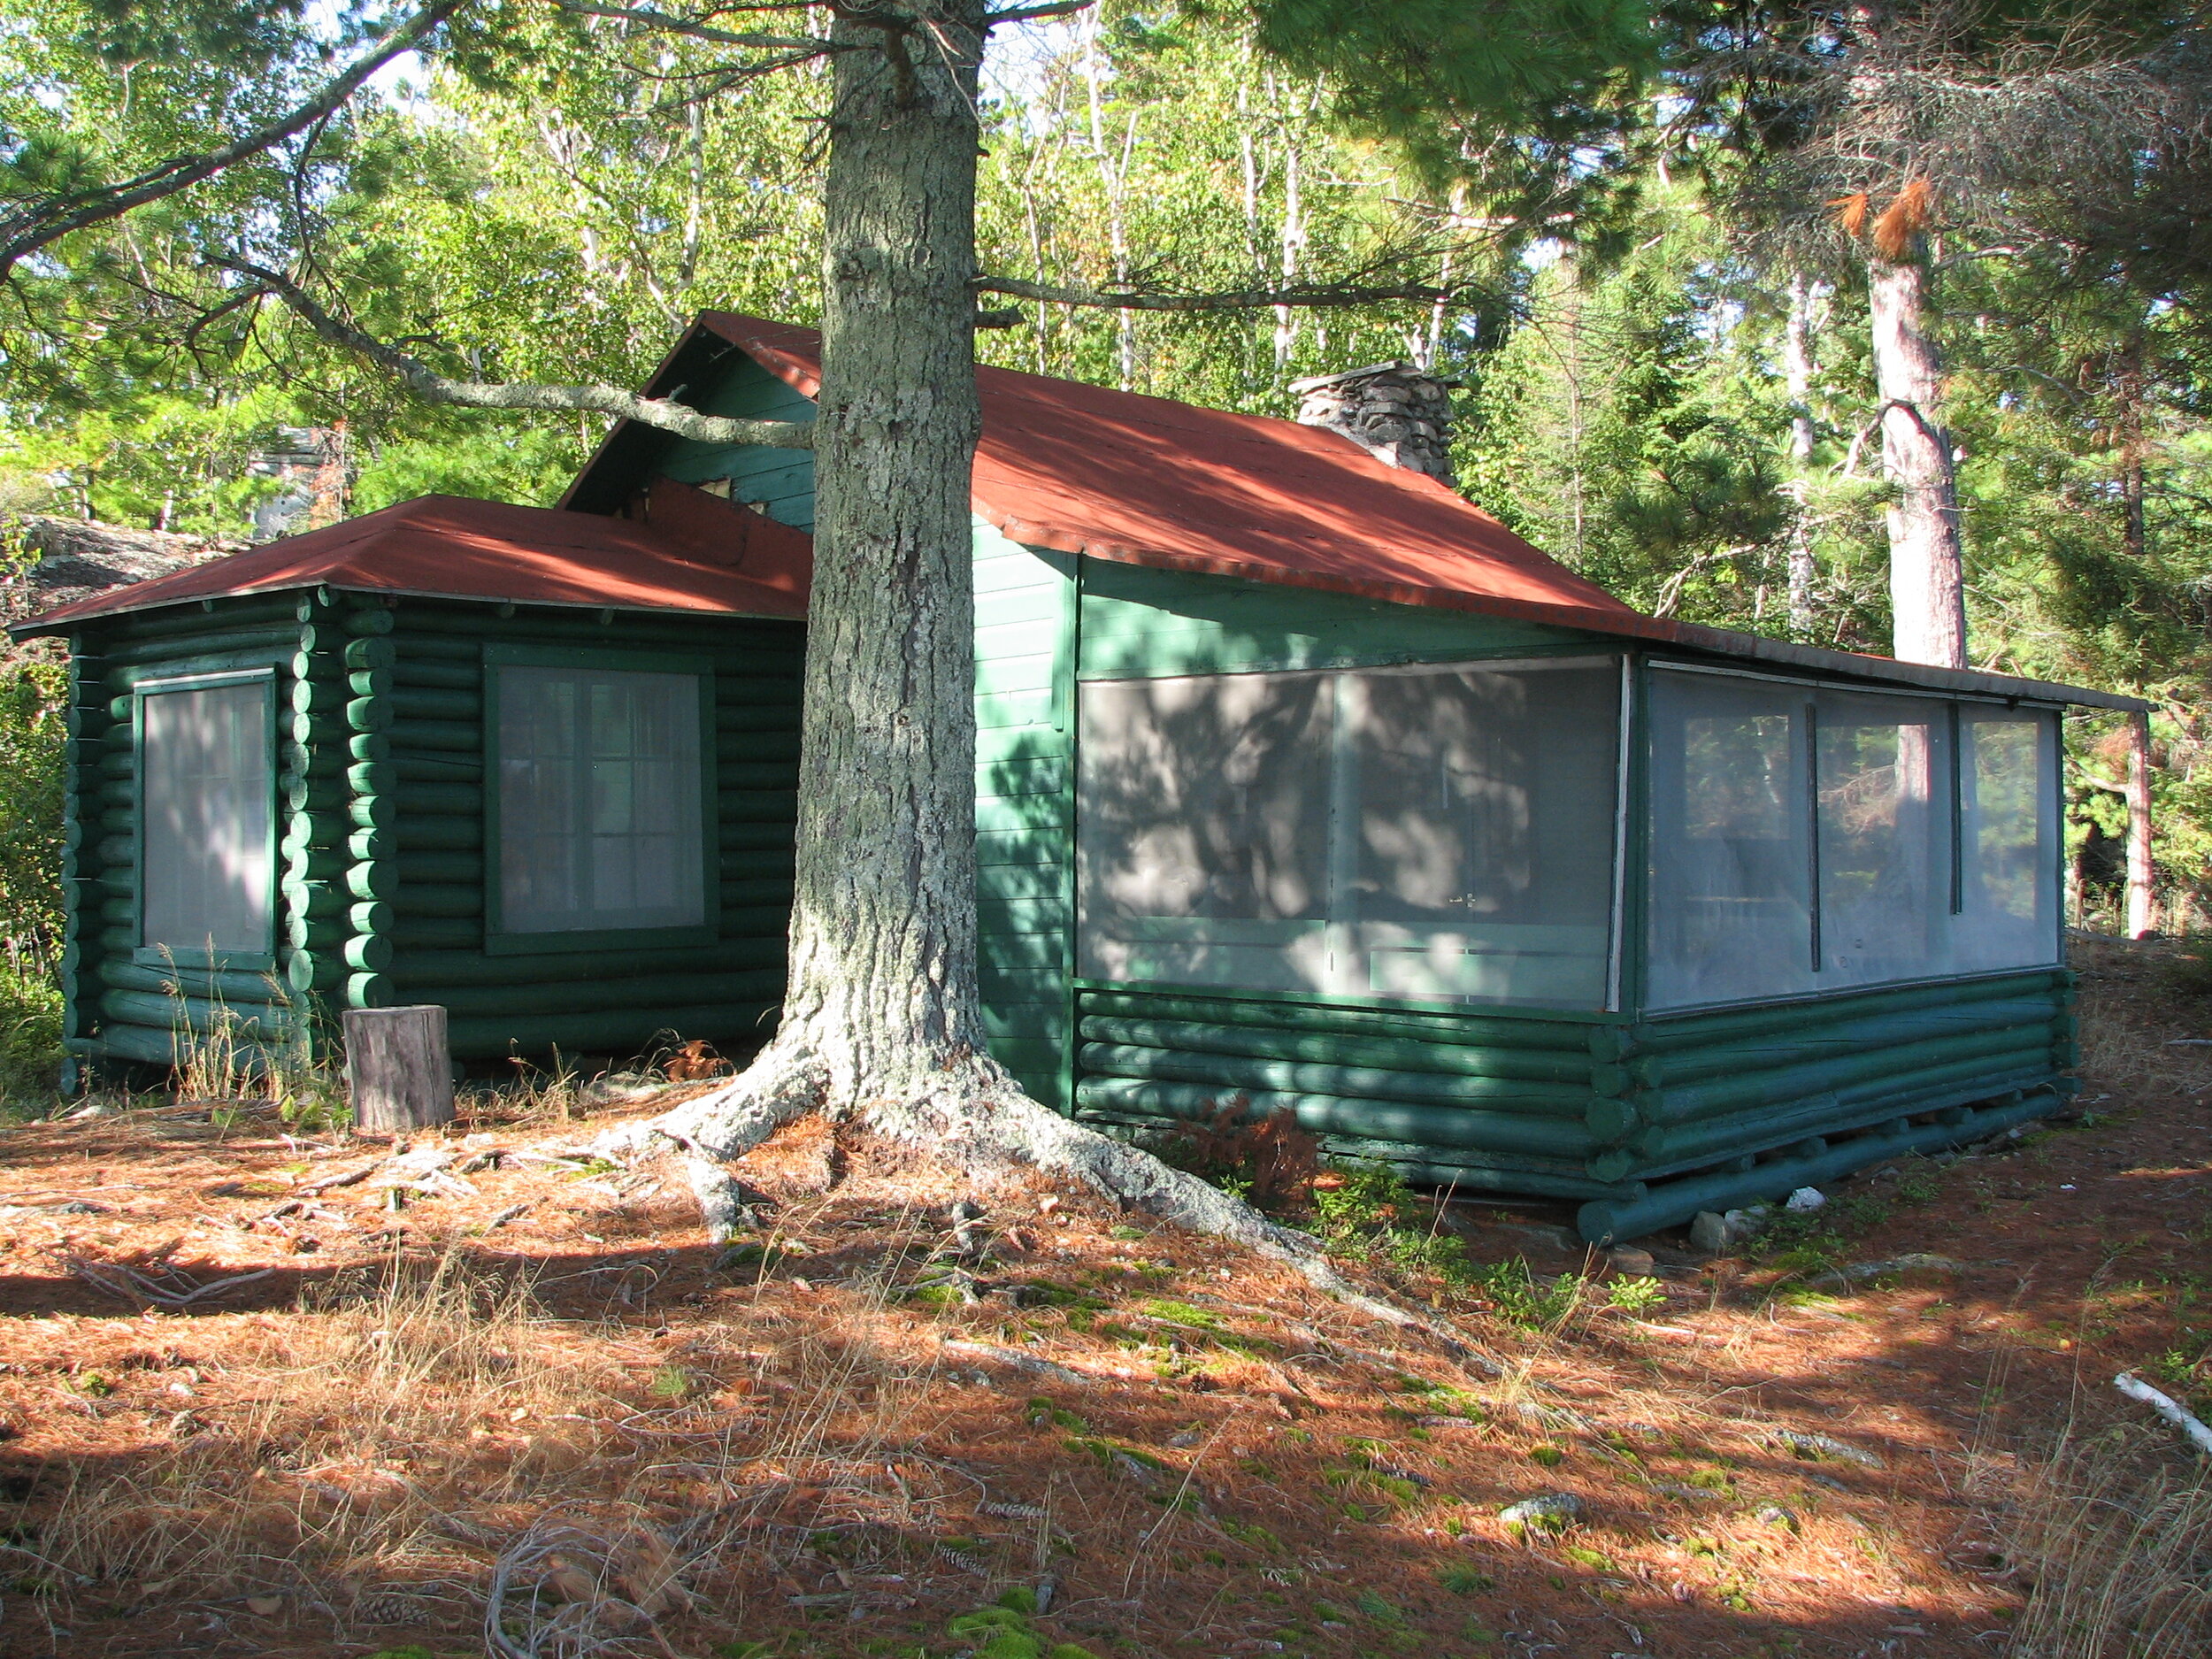 Photograph of Jun Fujita's Rainy Lake cabin. It has painted green log walls and a light red roof. 